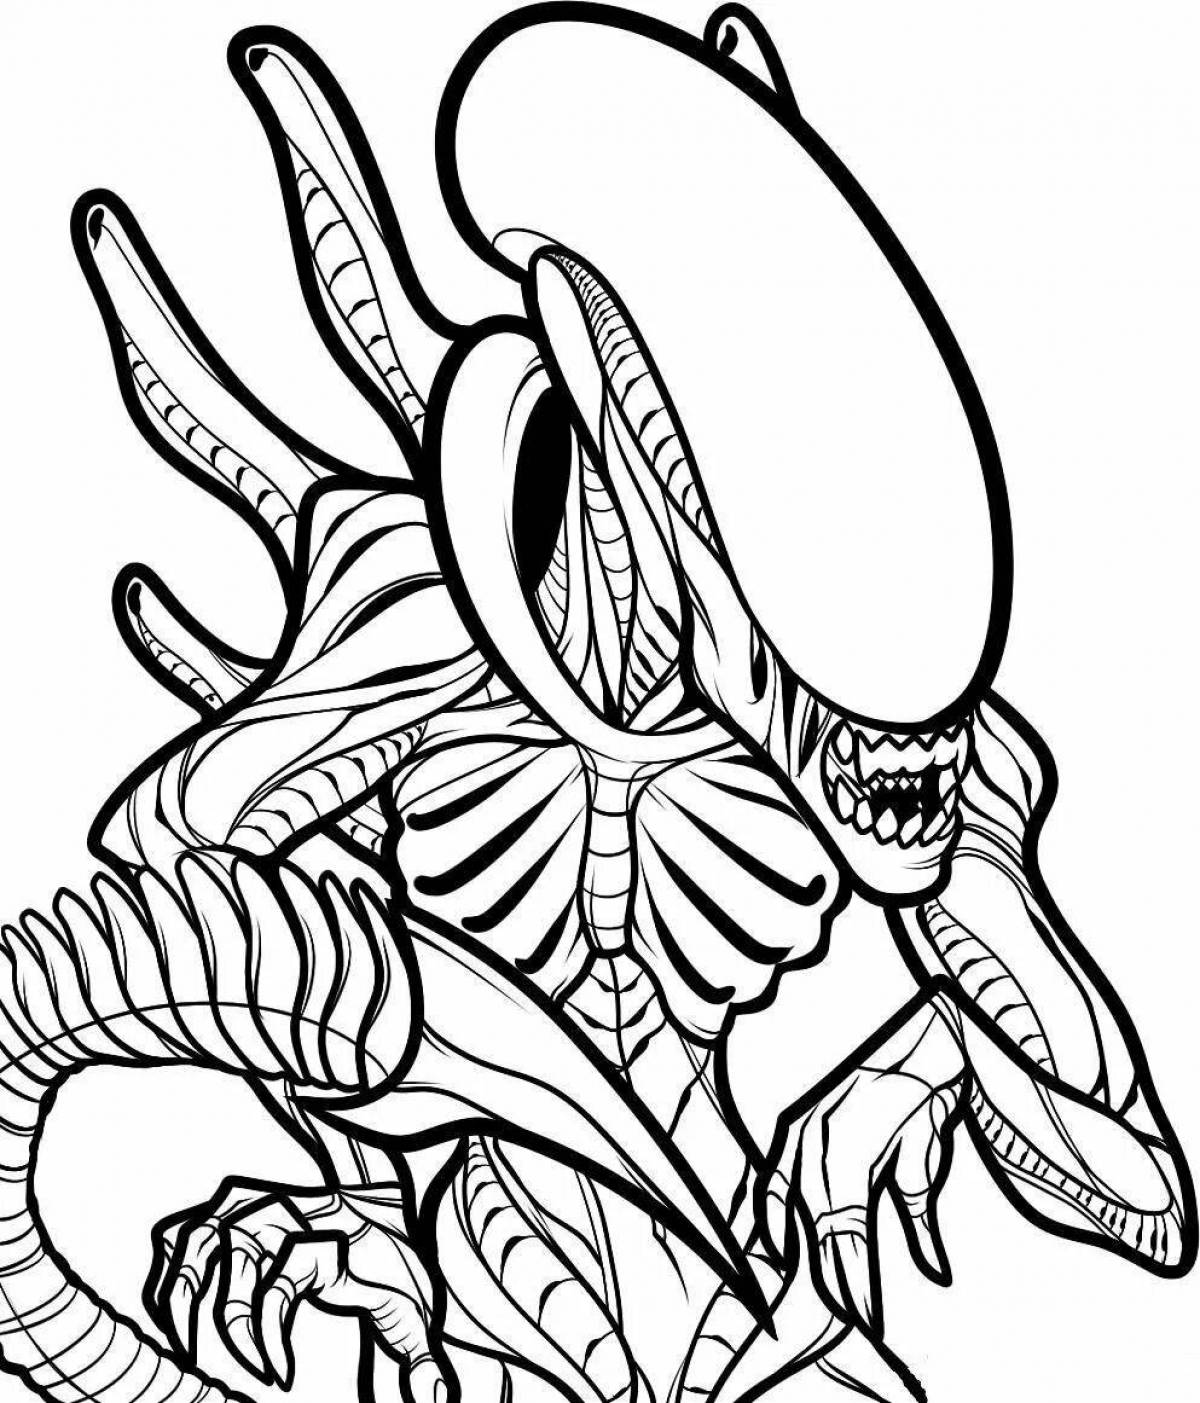 Unique alien and predator coloring page